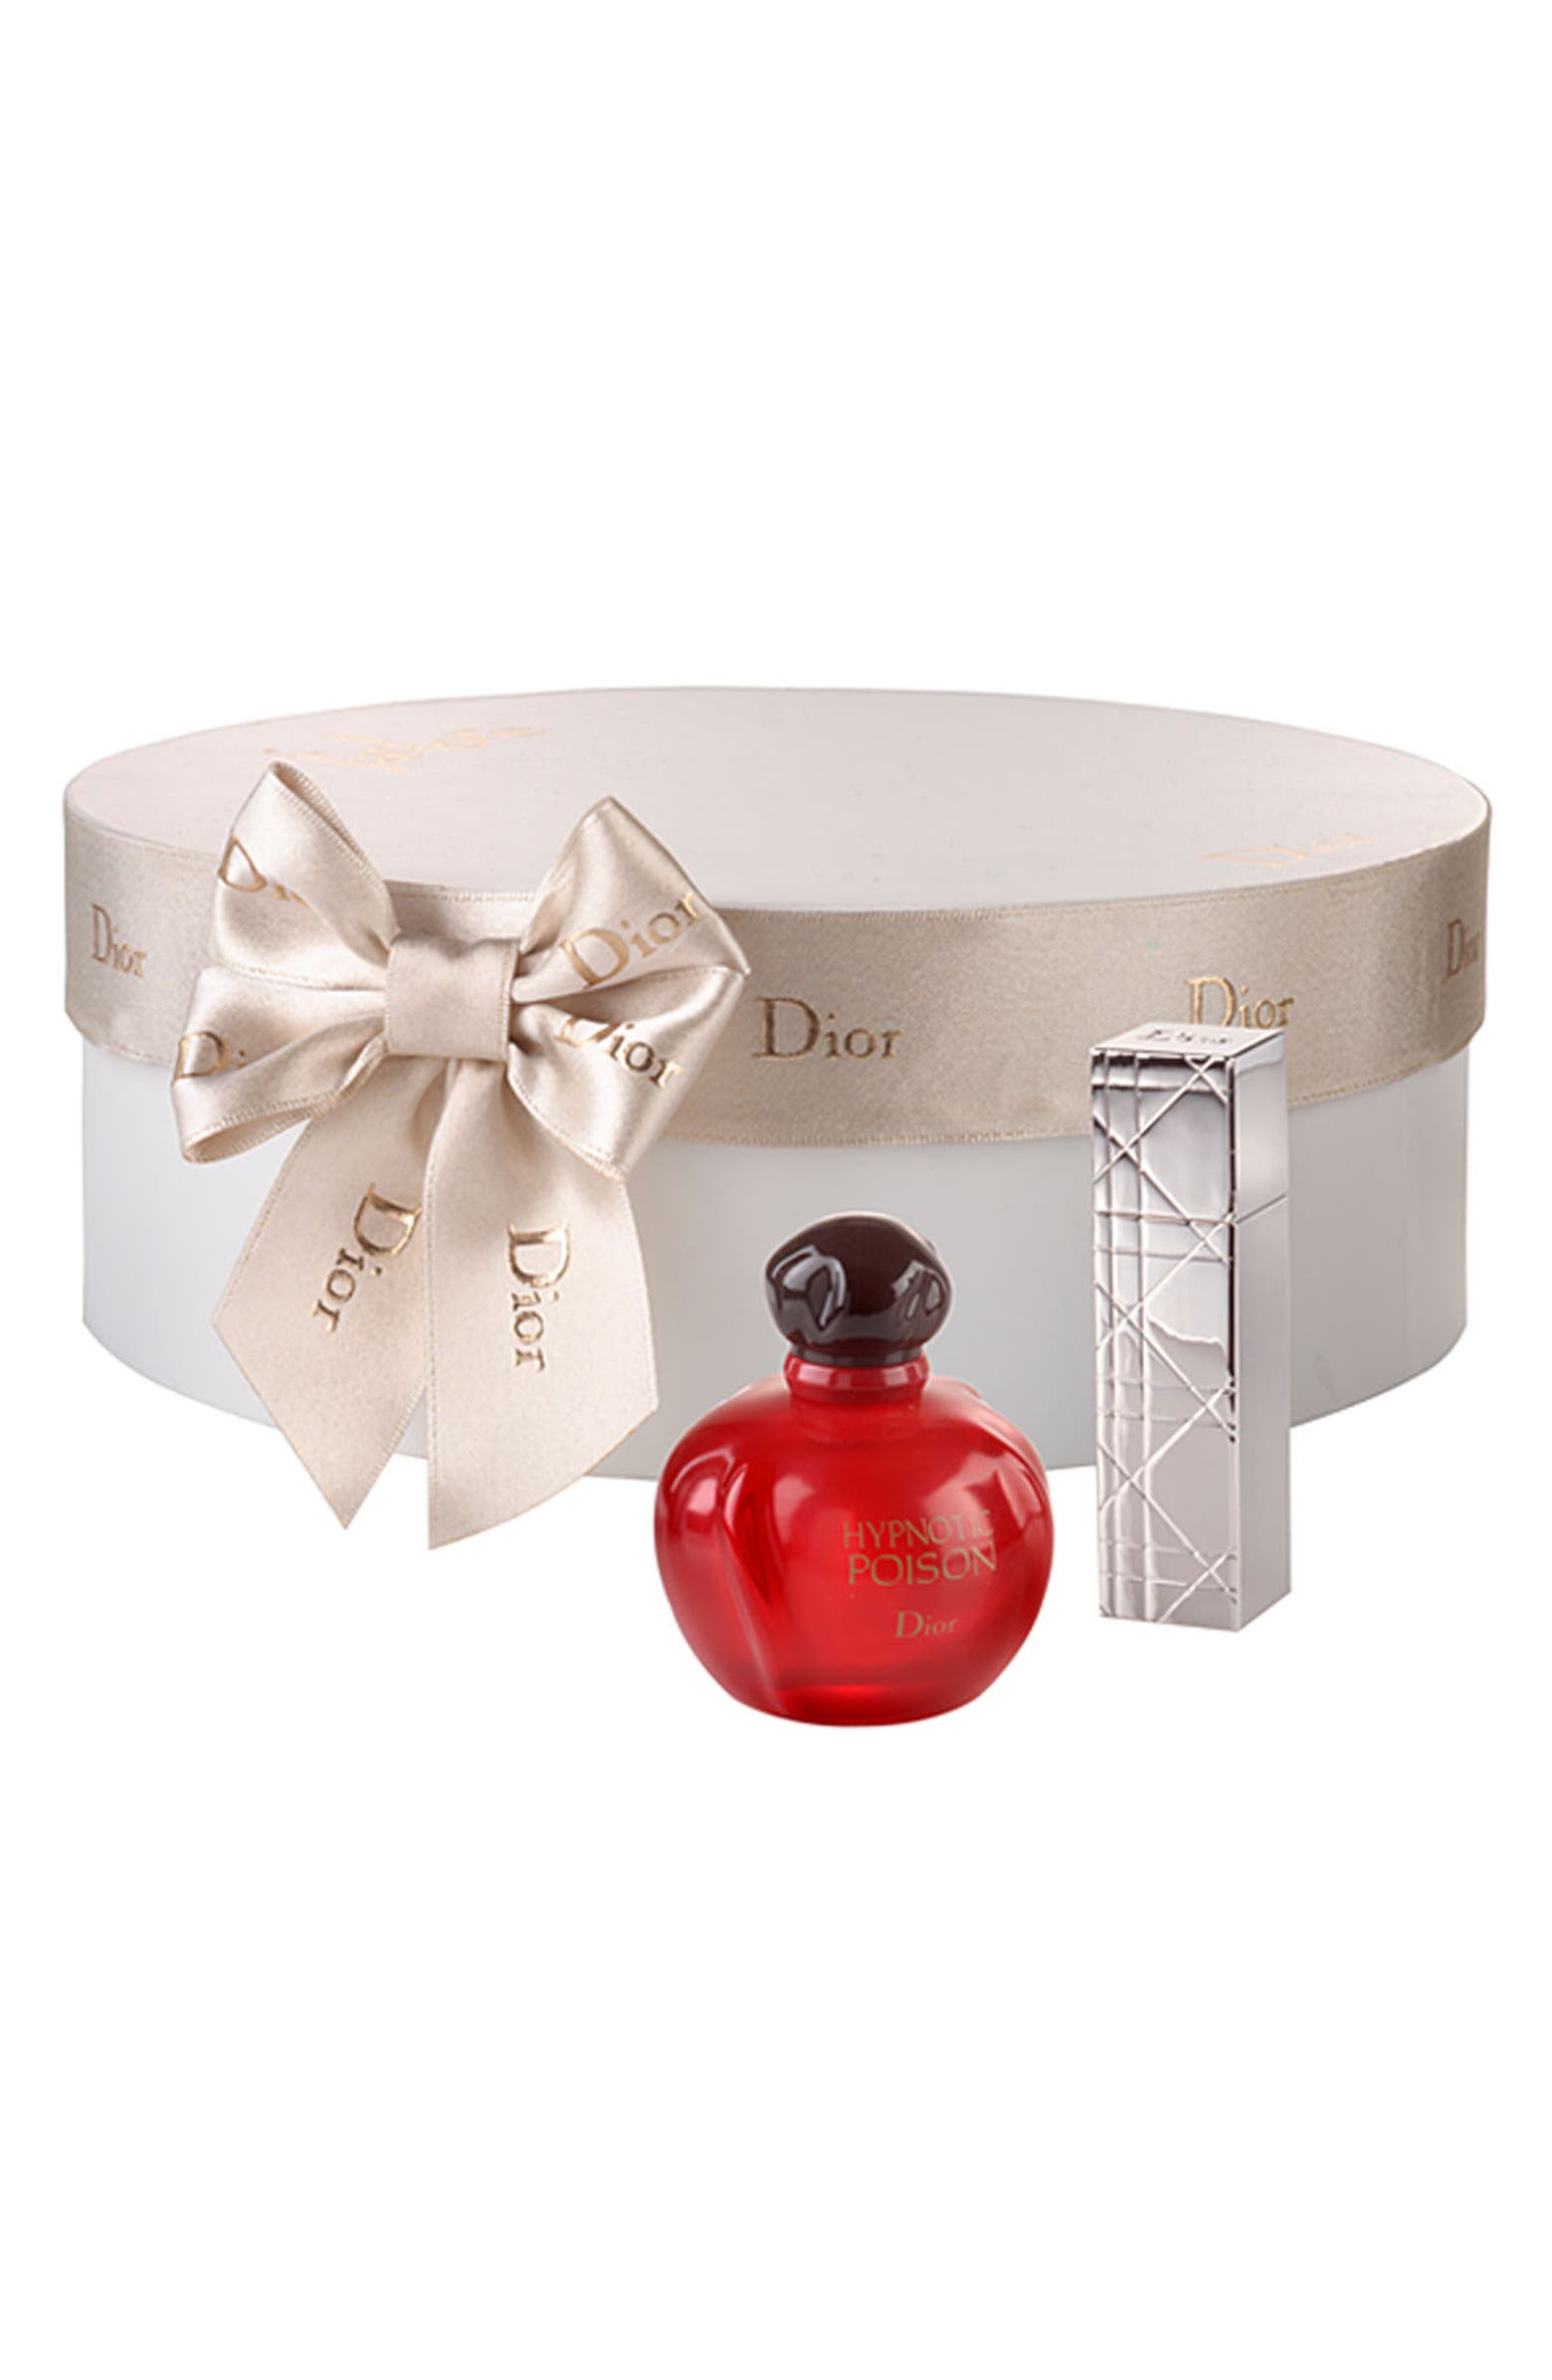 Dior 'Hypnotic Poison' Jewel Box Set Nordstrom